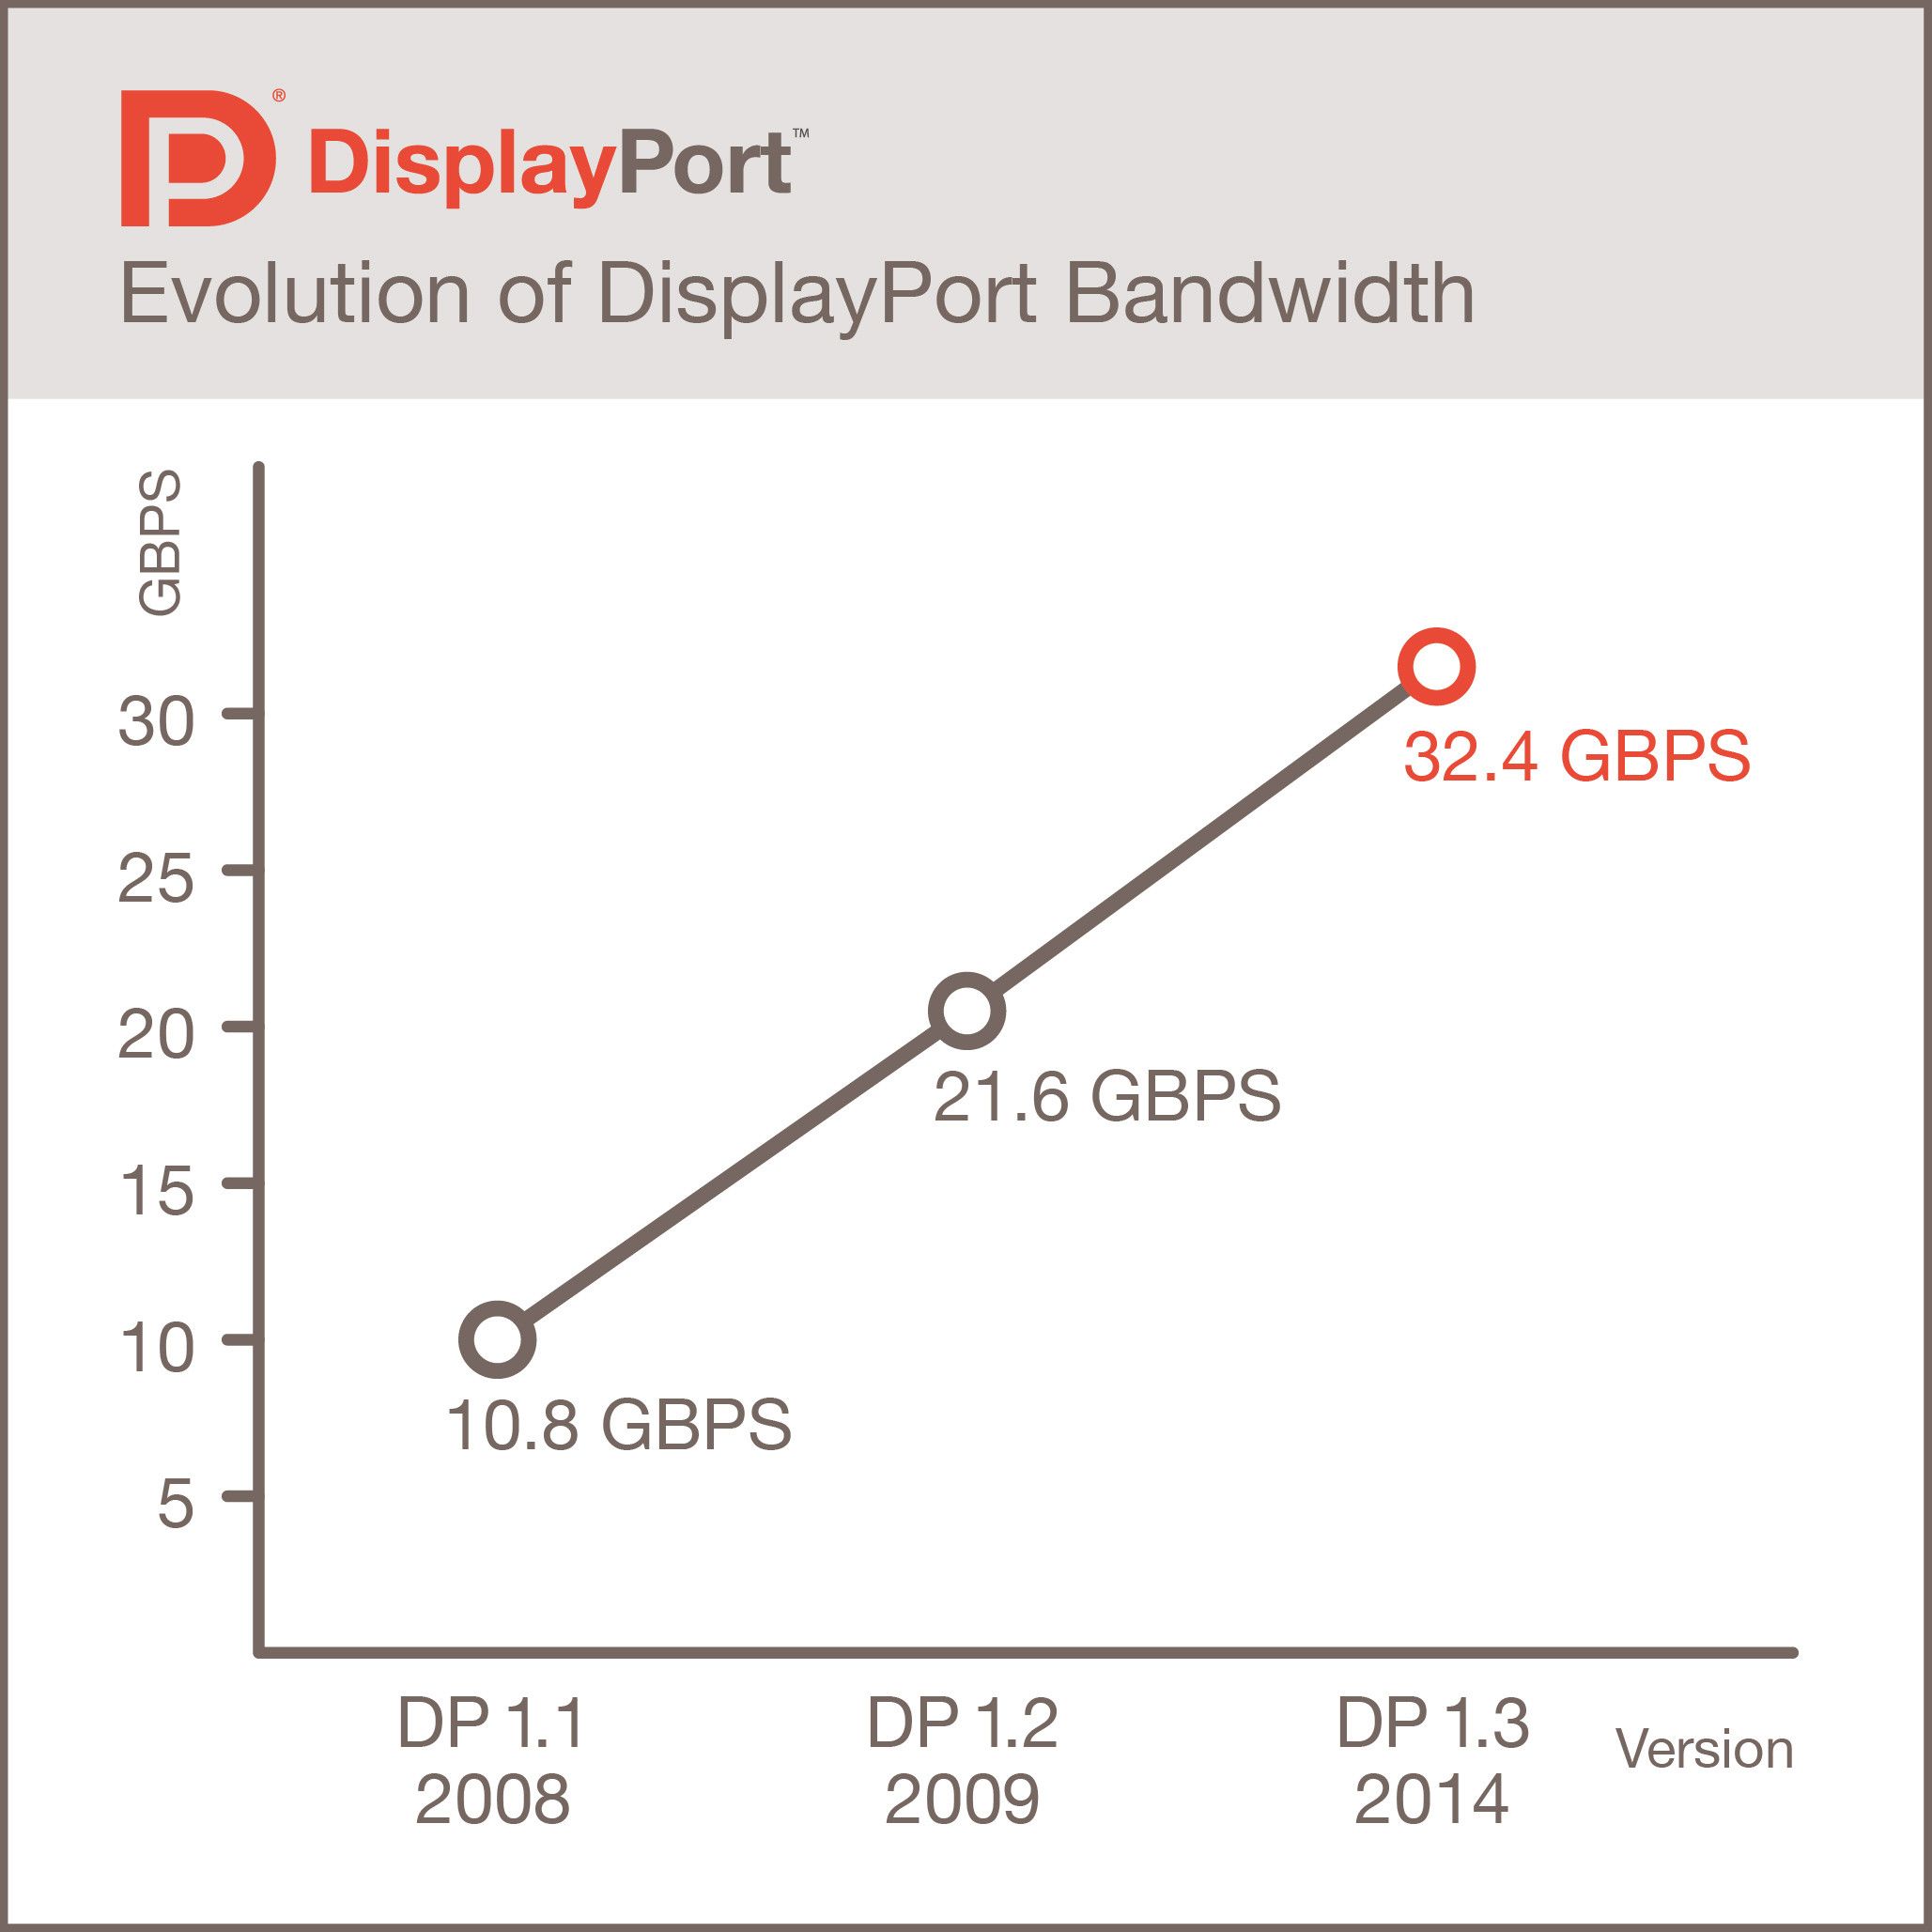 DisplayPort